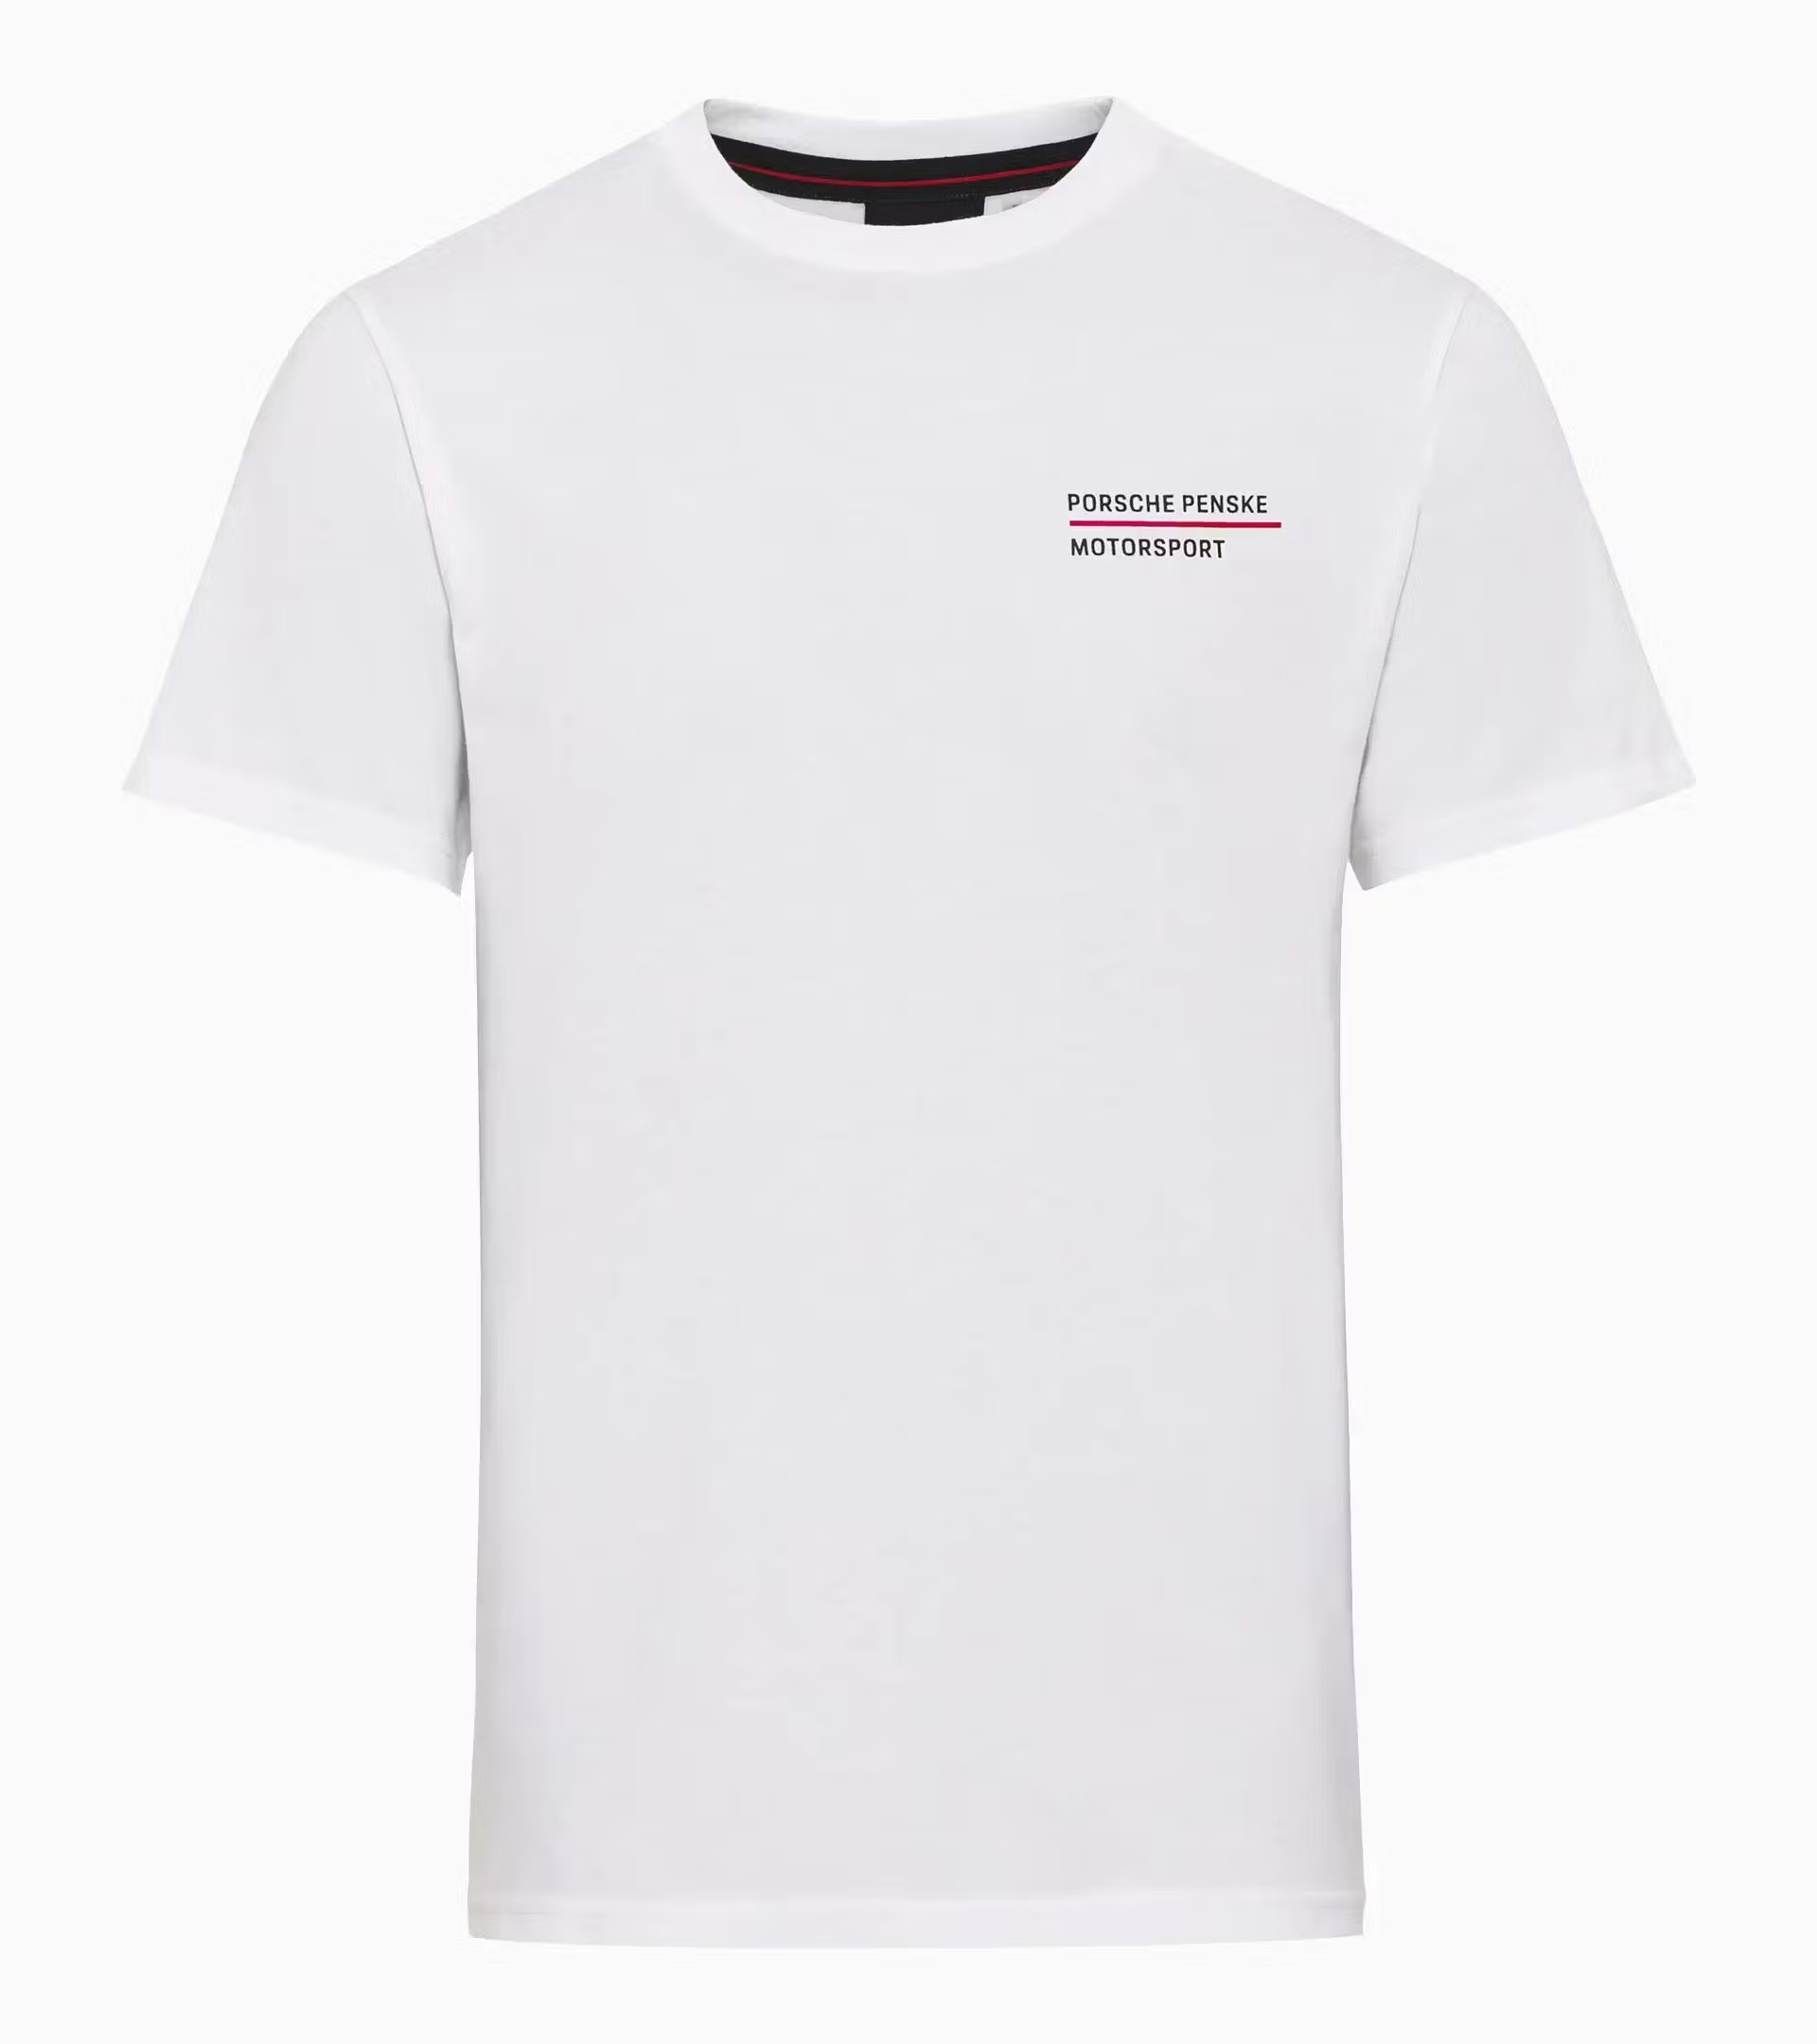 Porsche T-shirt unisexe – Porsche Penske Motorsport